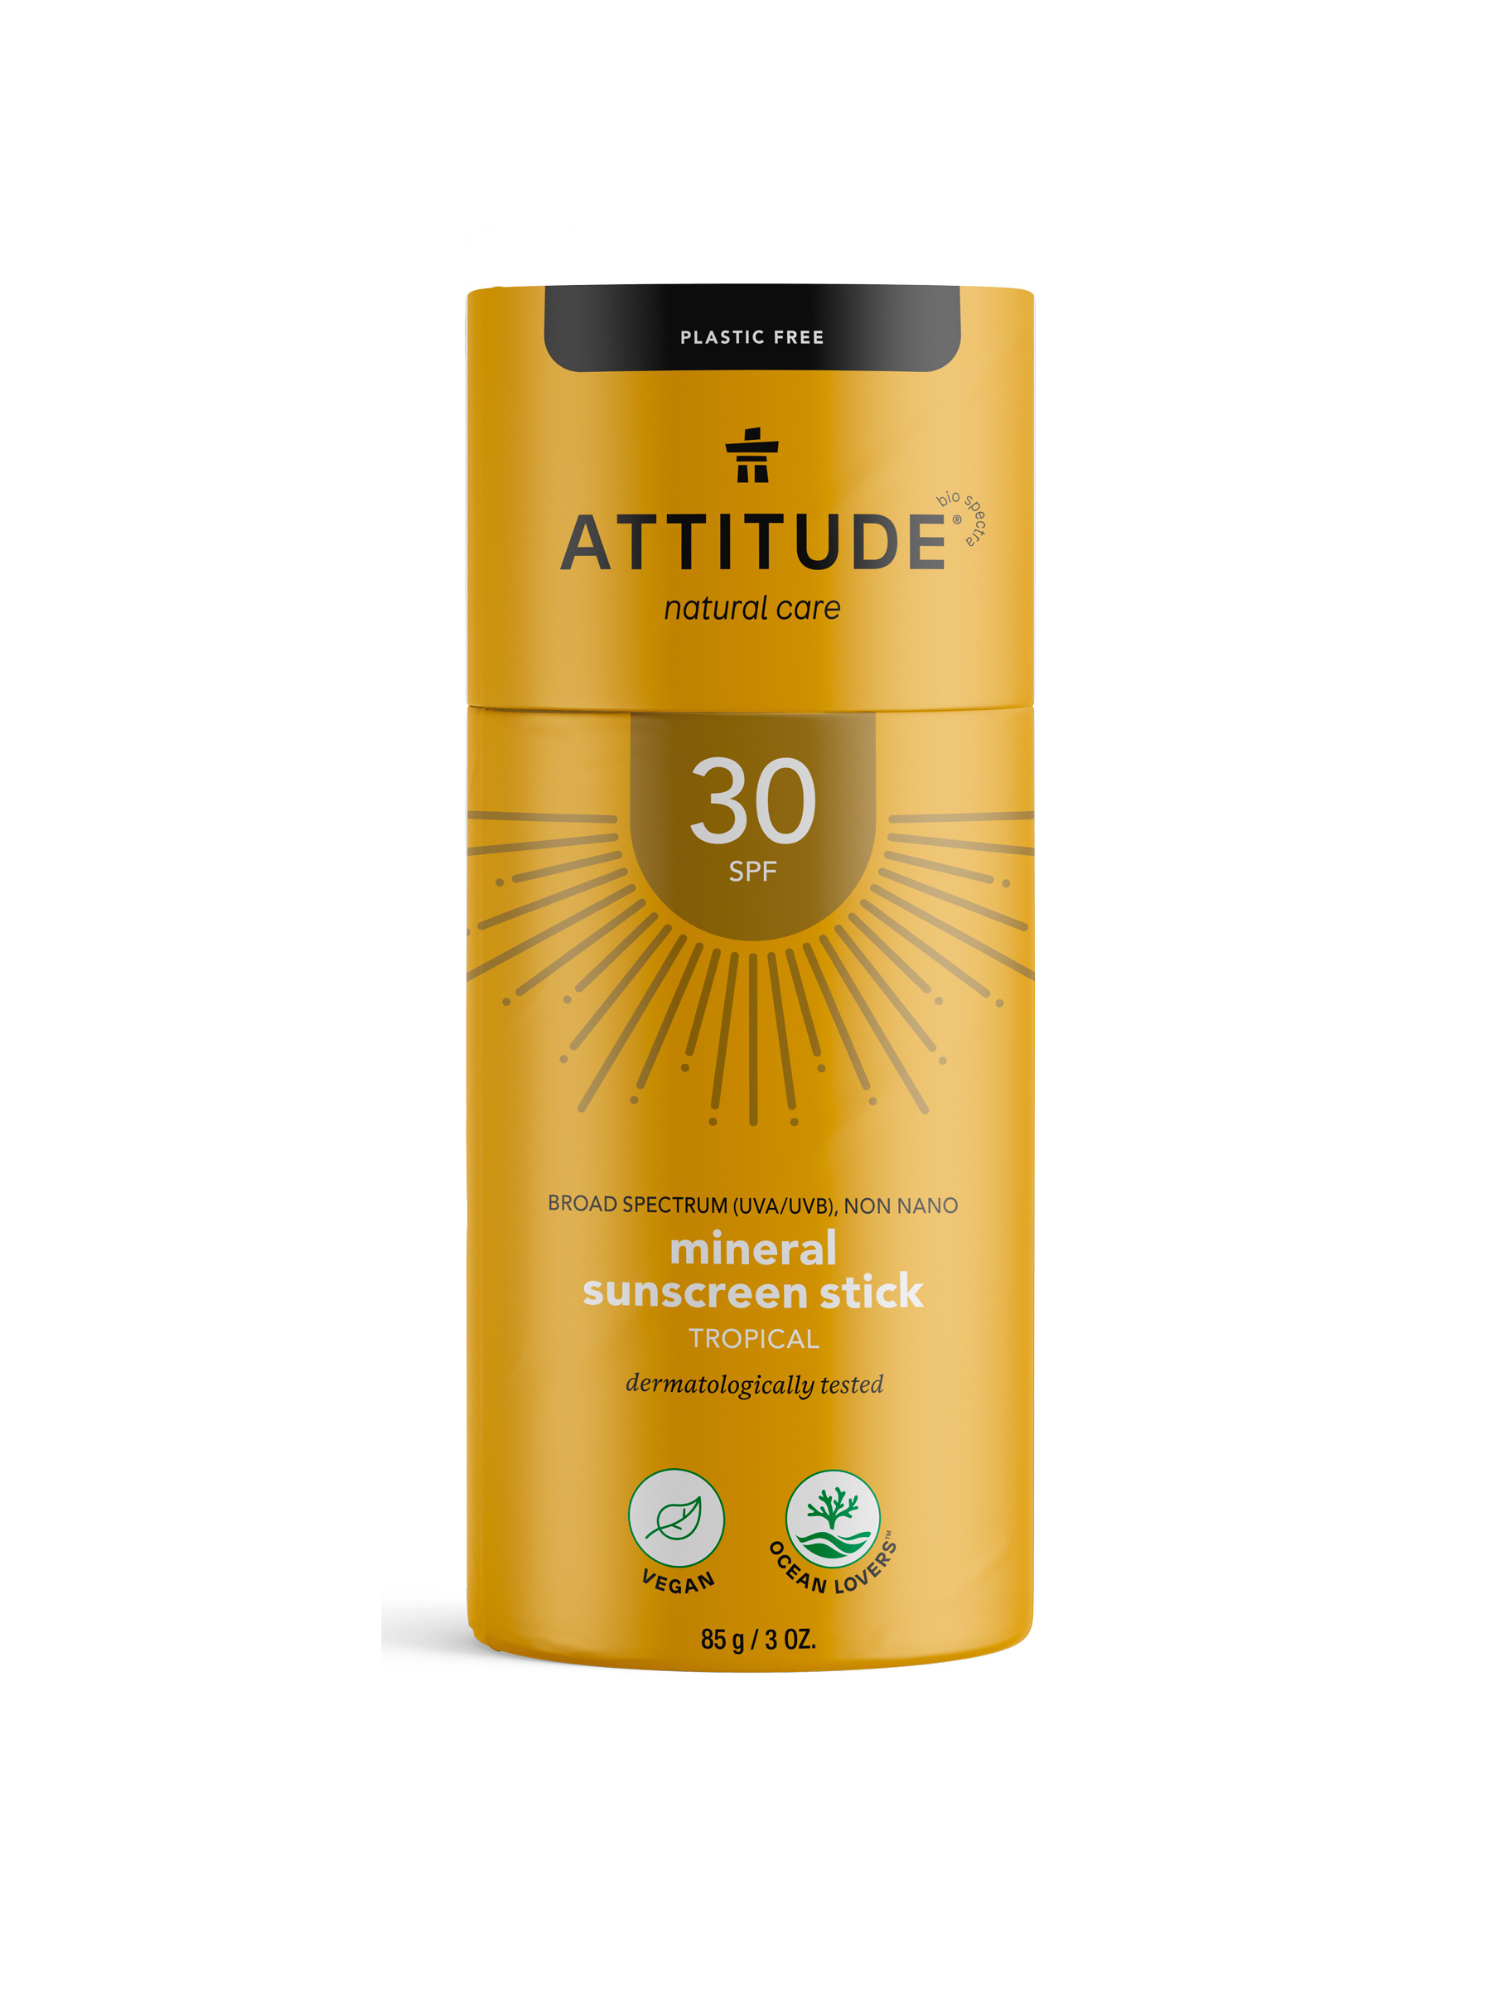 Natural Sunscreen, Attitude, NourishedNatural Suncreen, ATTITUDE sunscreen, EWG verified sunscreen, non-nano sunscreen, sunscreen, sunscreen stick, Nourished. 